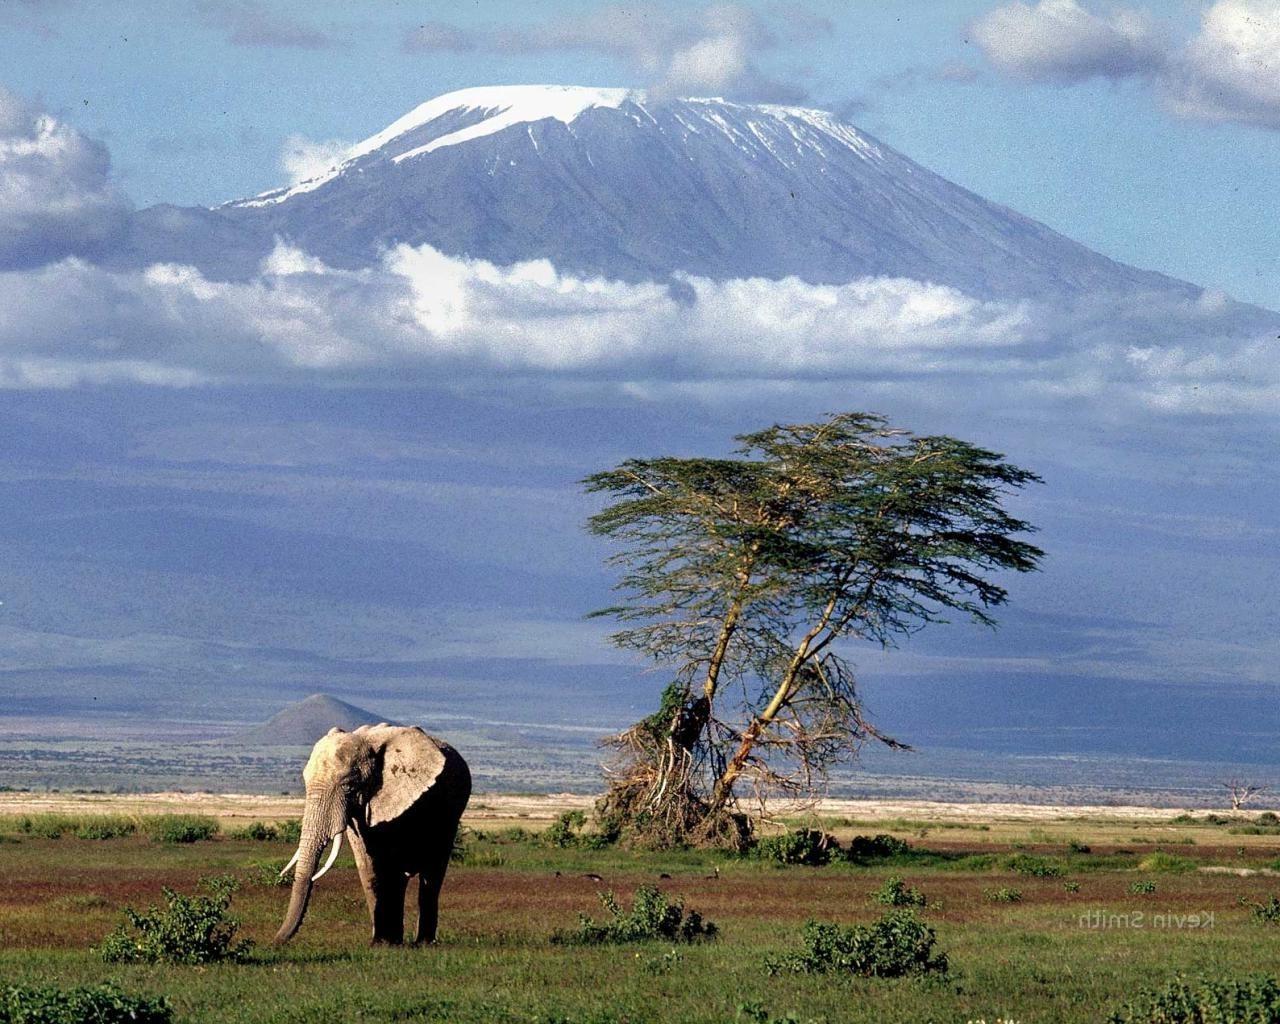 HD wallpaper, 1280X1024 Africa Mount Kilimanjaro Elephant Animals Nature Landscape Wallpaper Jpg 327 Kb